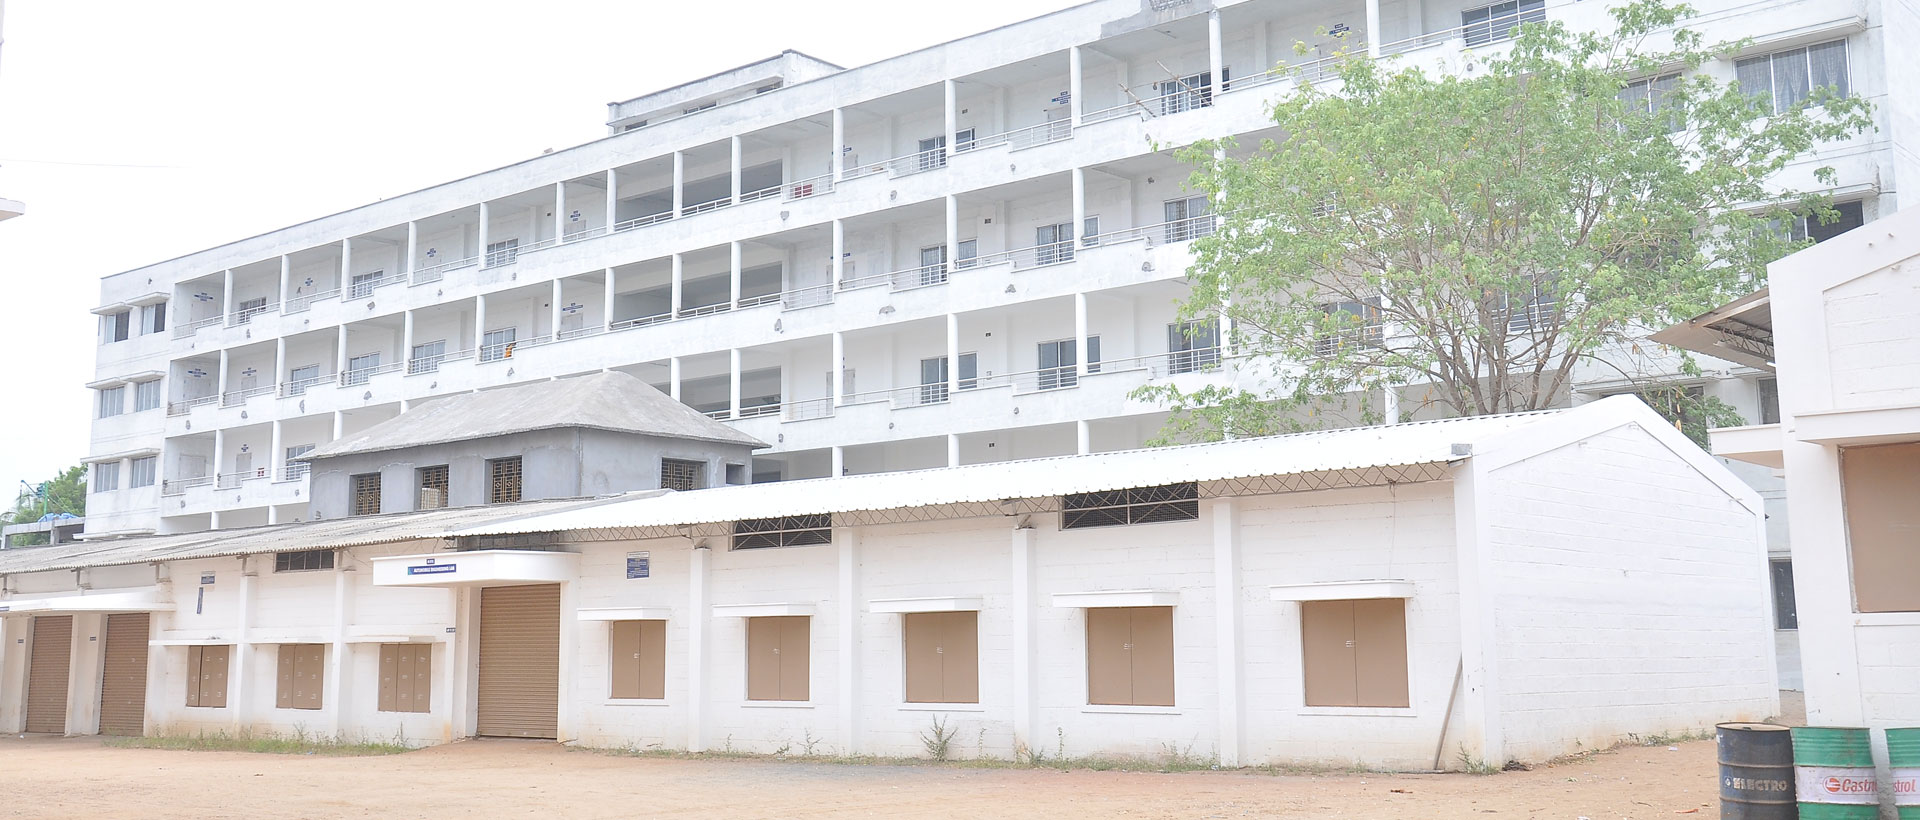 KSR Polytechnic College Additional Block